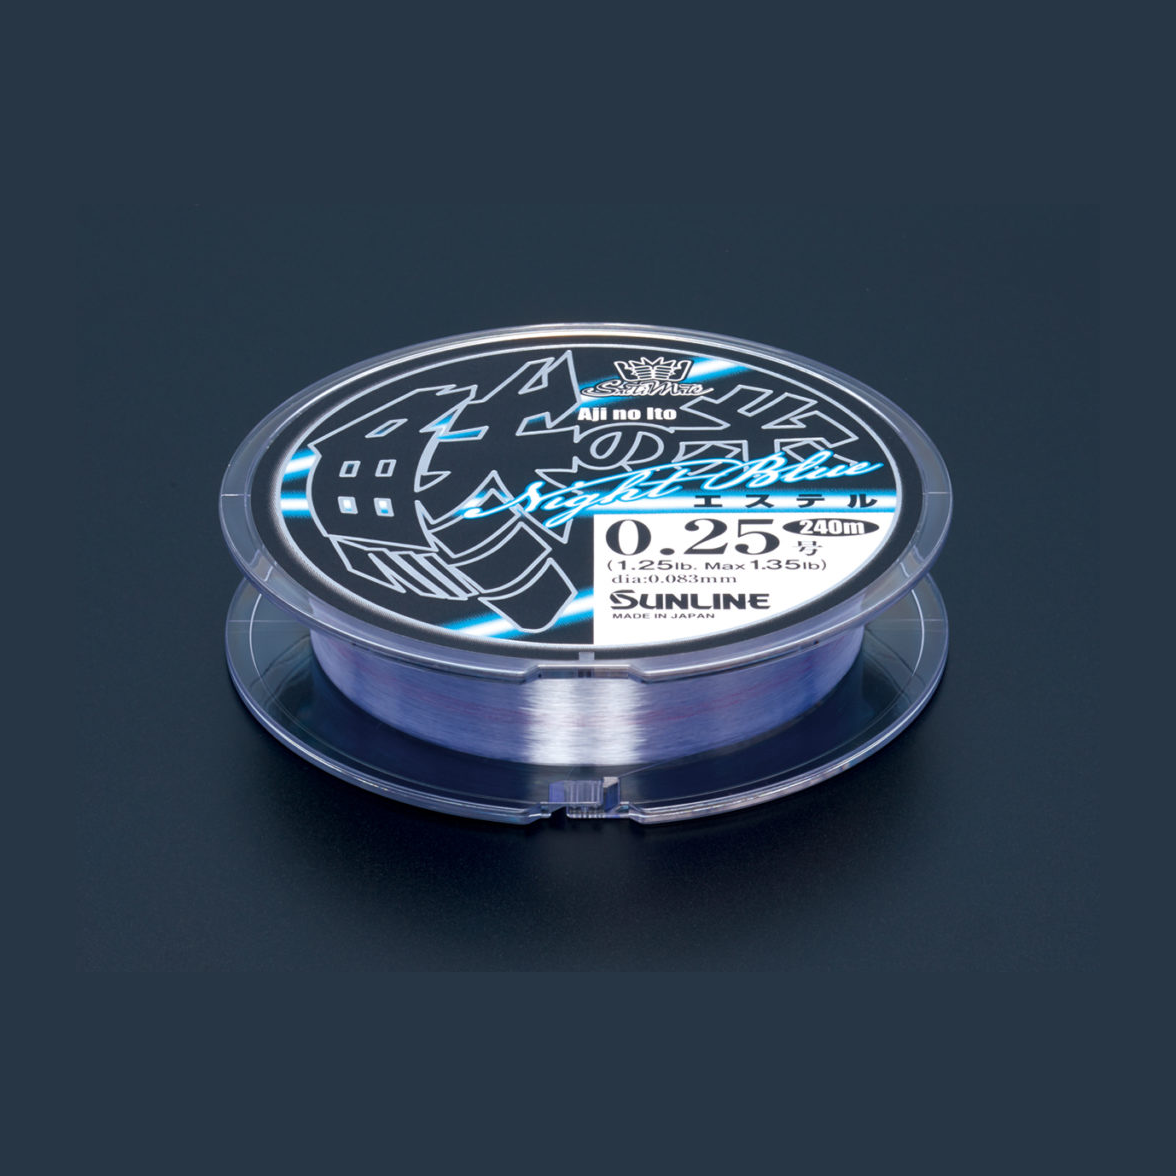 SUNLINE ソルティメイト 鯵の糸 エステル ナイトブルー 0.25号/1.3lb/ナイトブルー/240m